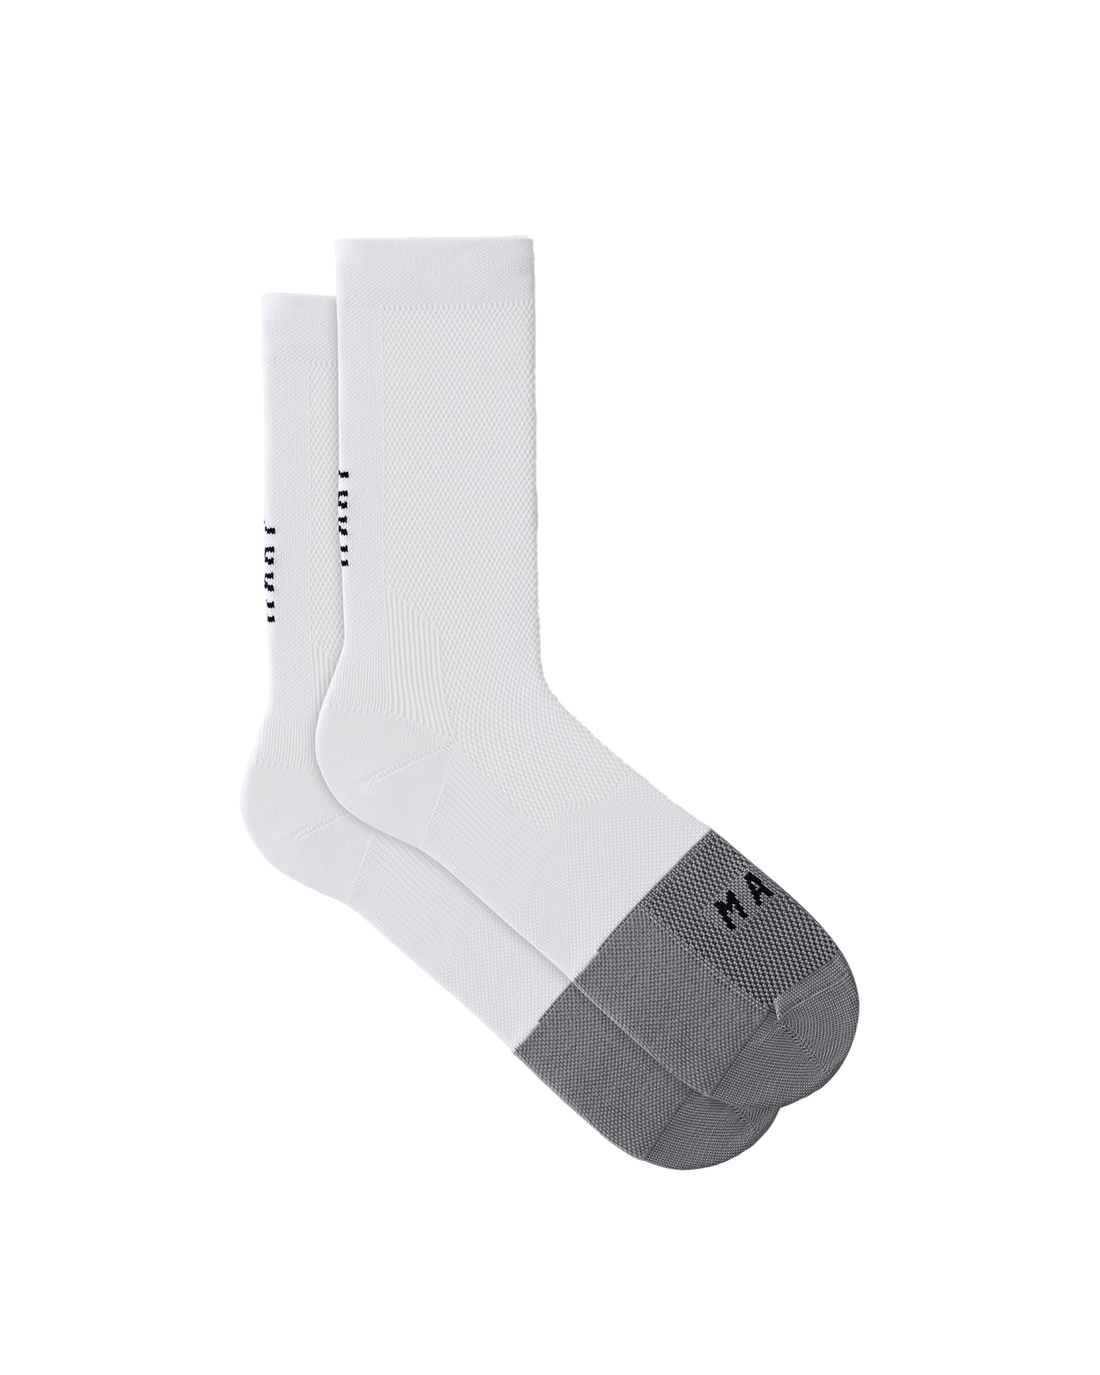 Division Sock - White/Grey - MAAP